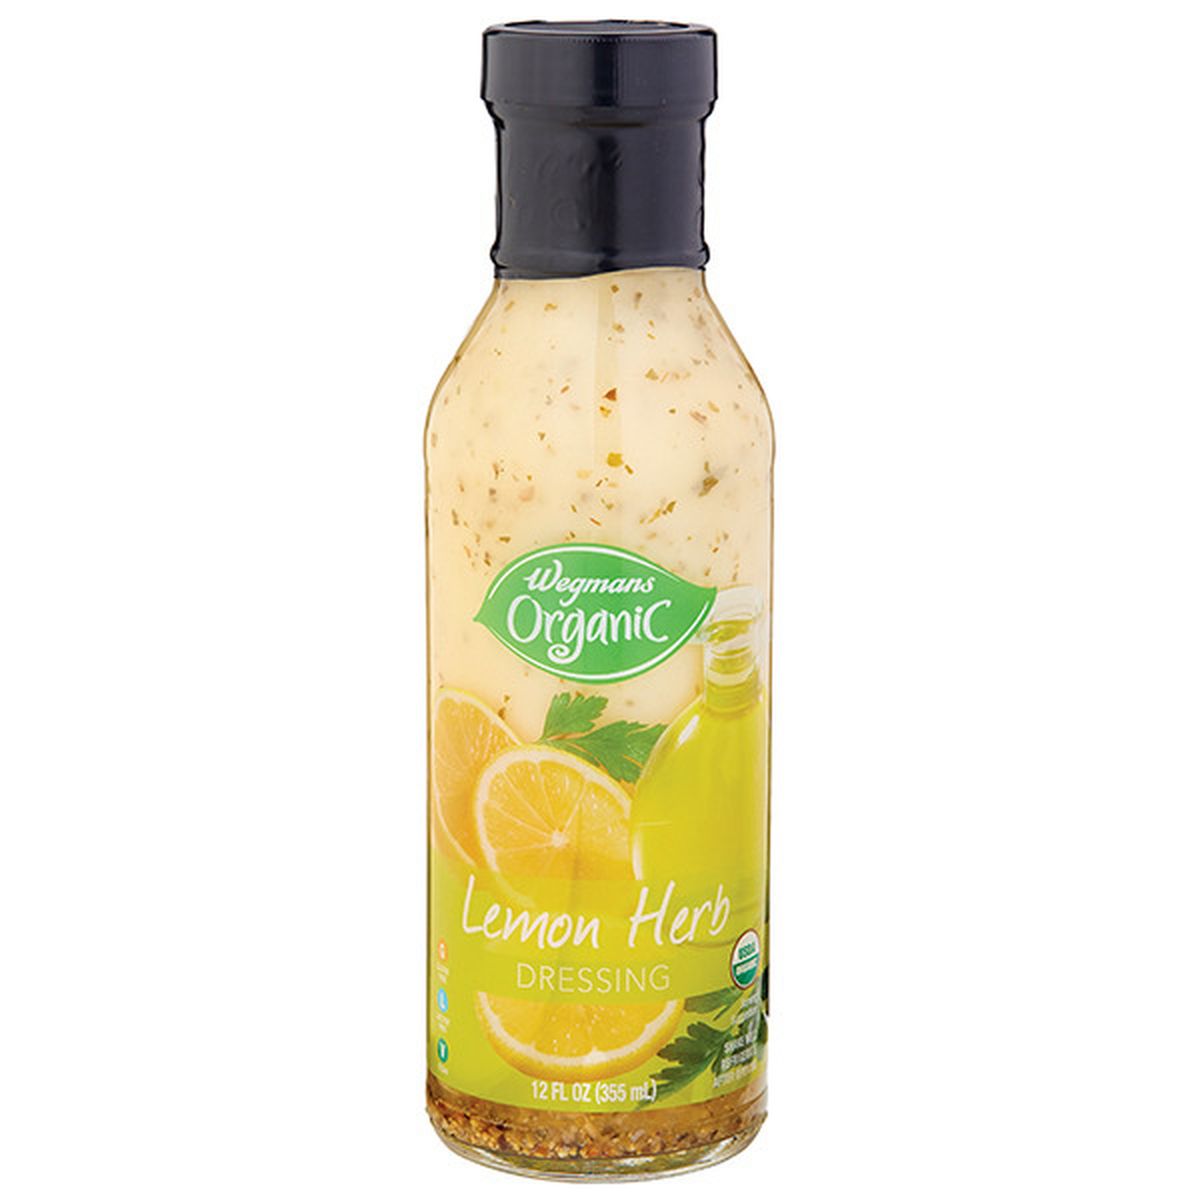 Calories in Wegmans Organic Lemon Herb Dressing